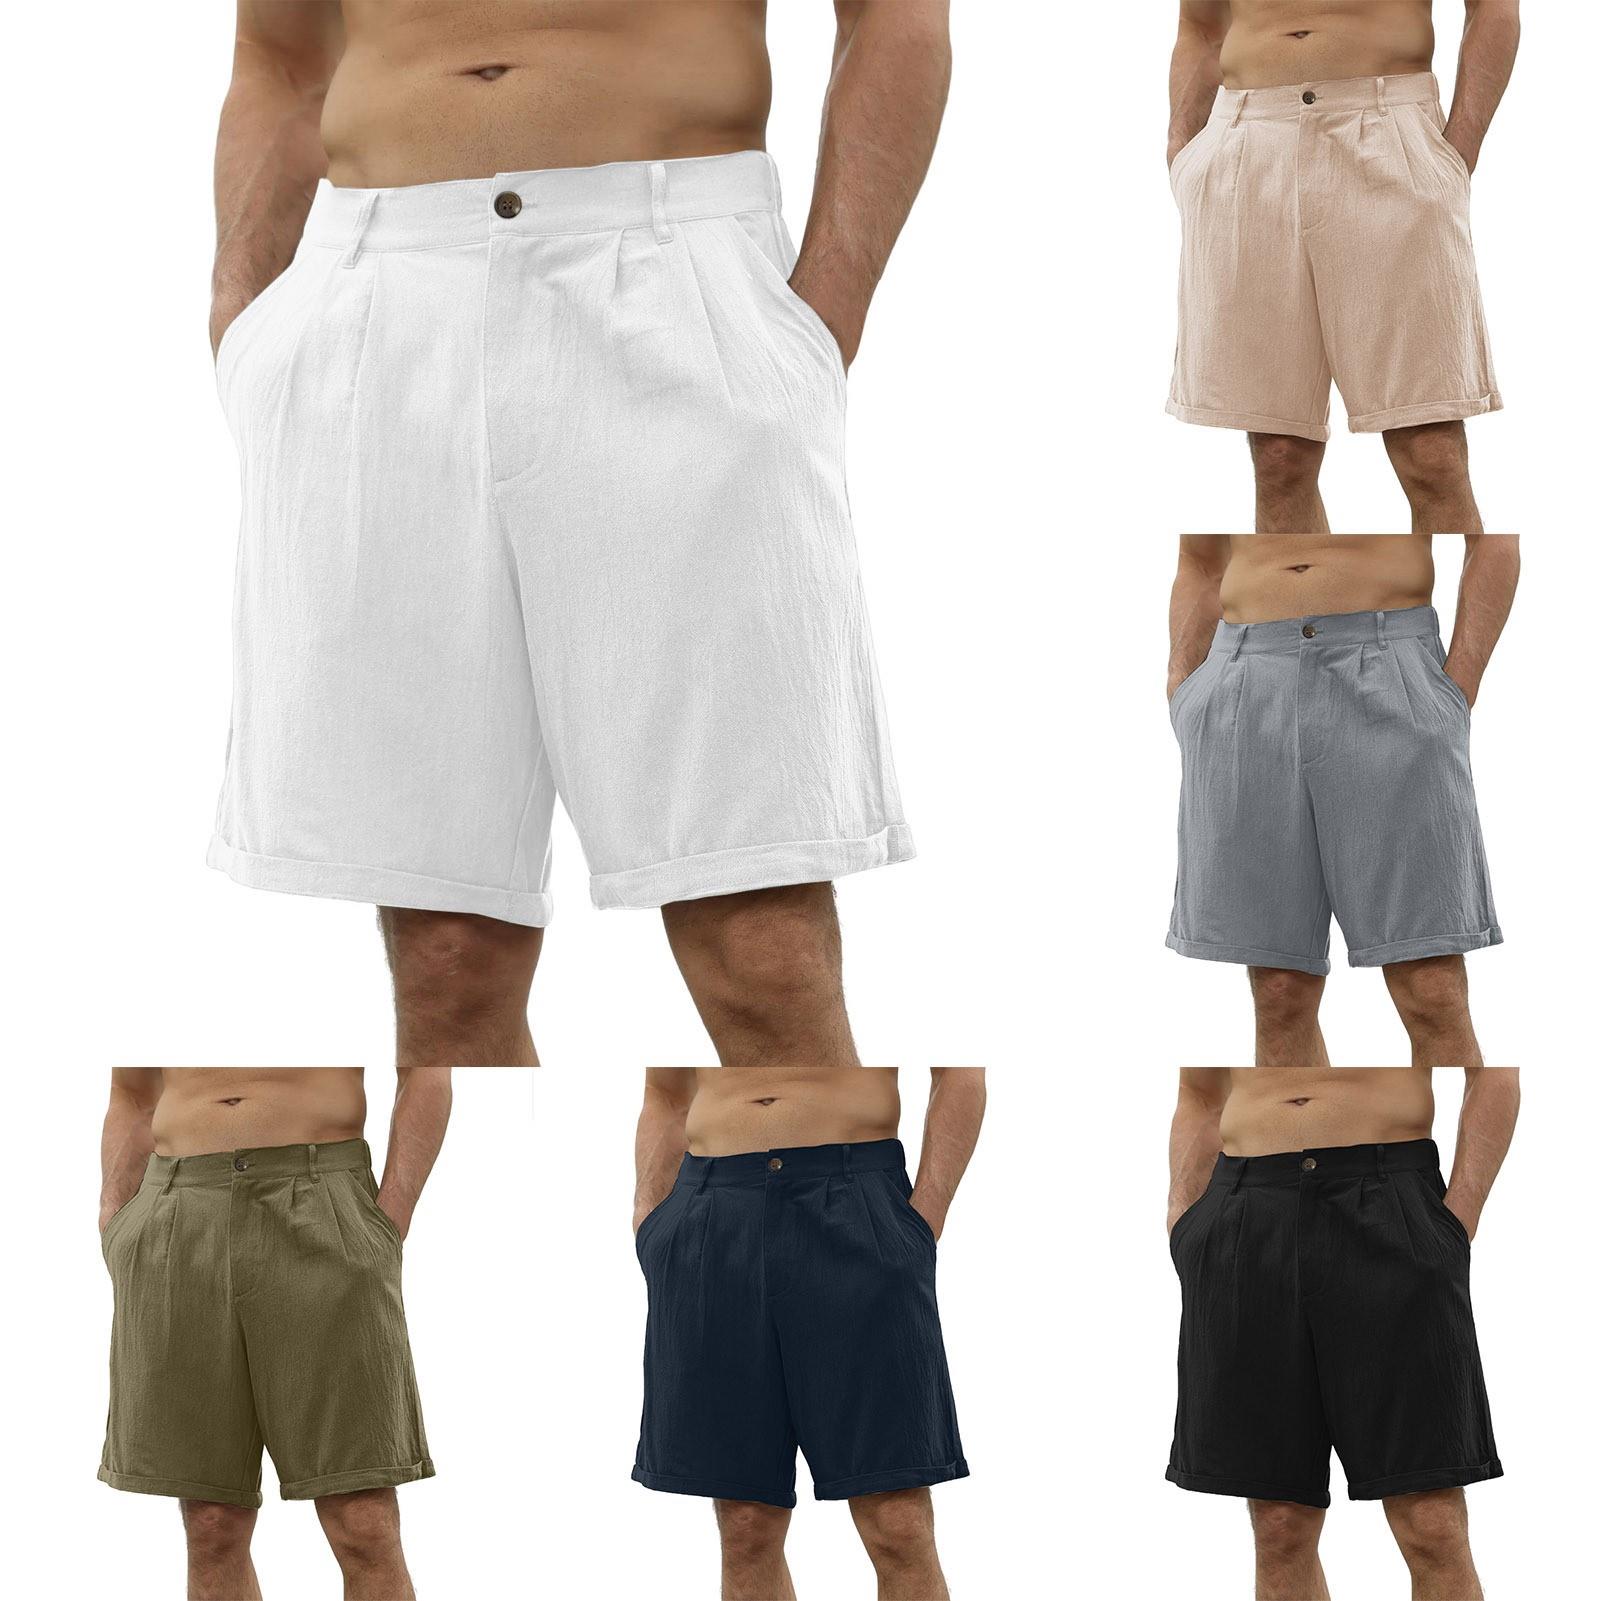 Shorts Short Pants Men Board Clothing For Clothes Man Brand 男装 短裤 原图主图